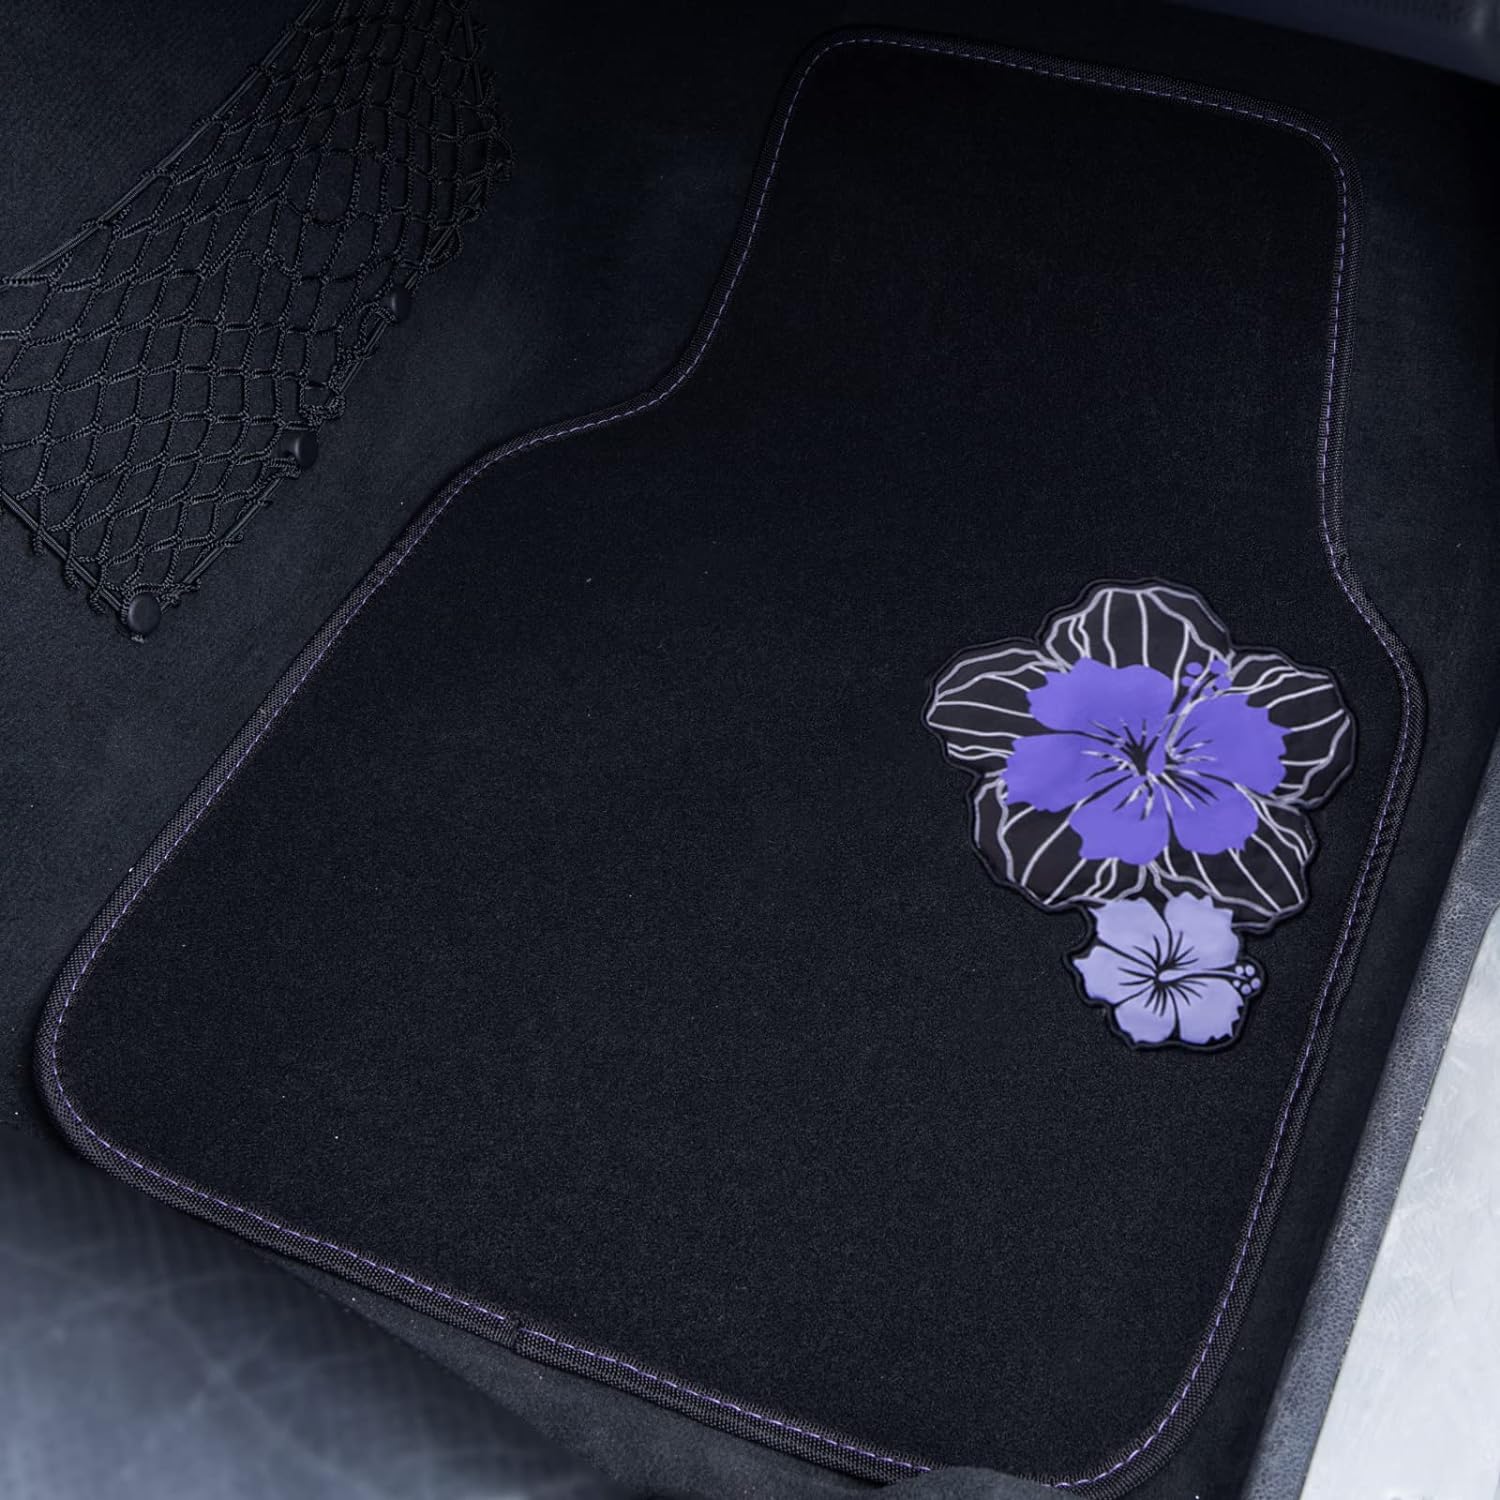 CAR PASS Cute Car Floor Mats with Hibiscus Flowers, 4 Pieces Waterproof, Anti-Slip Nibs Car Floor Mats for Women Girly, Fit Automotive,SUVS,Sedan,Vans (Black and Purple)